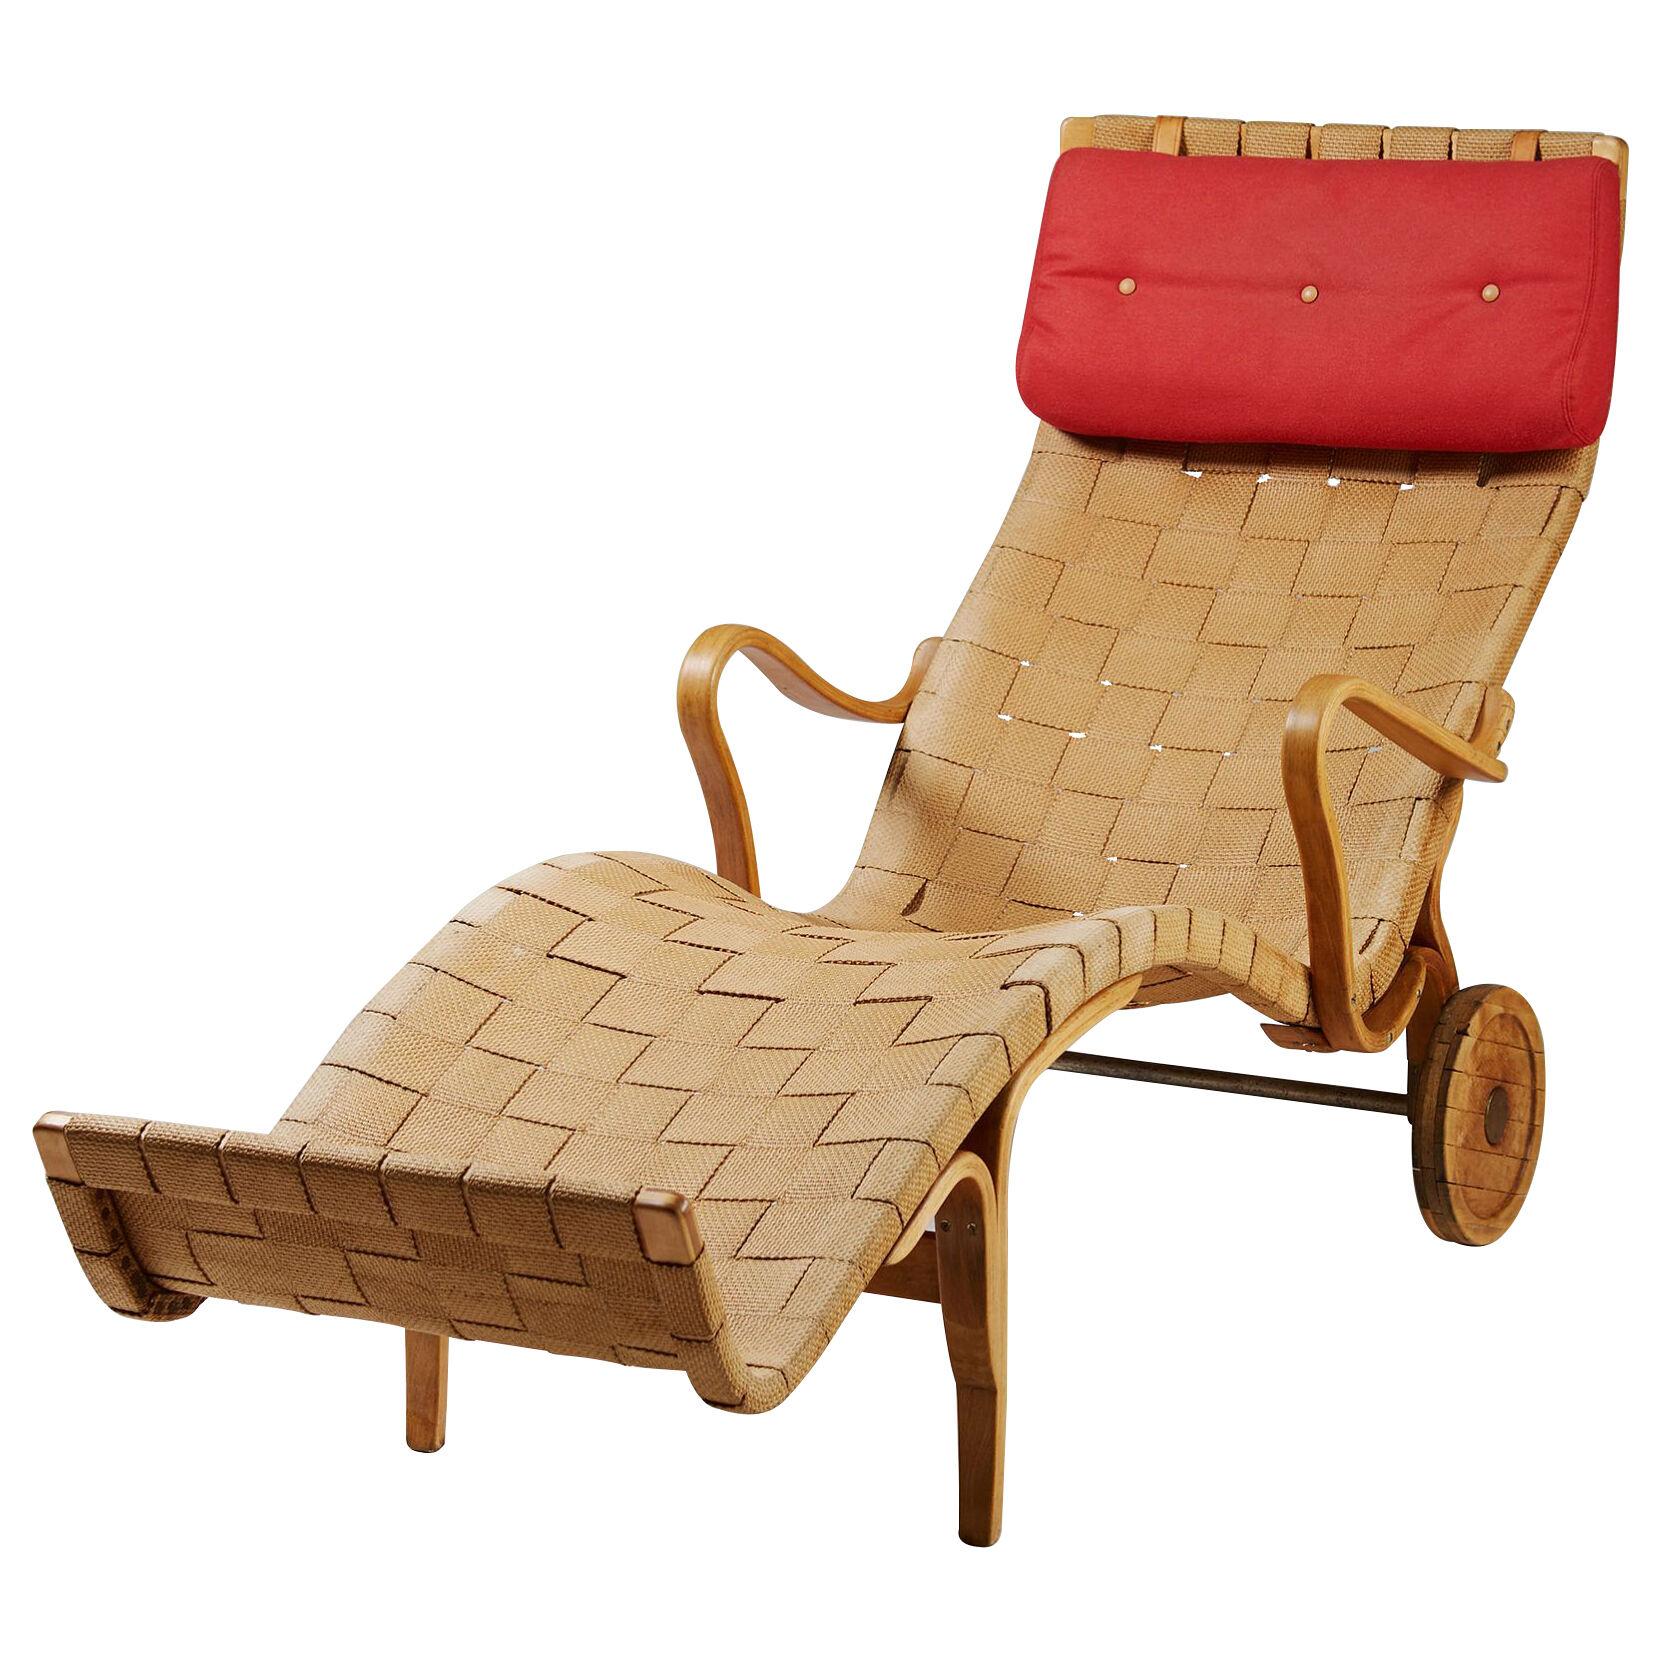 Chaise longue “Pernilla” designed by Bruno Mathsson for Karl Mathsson,